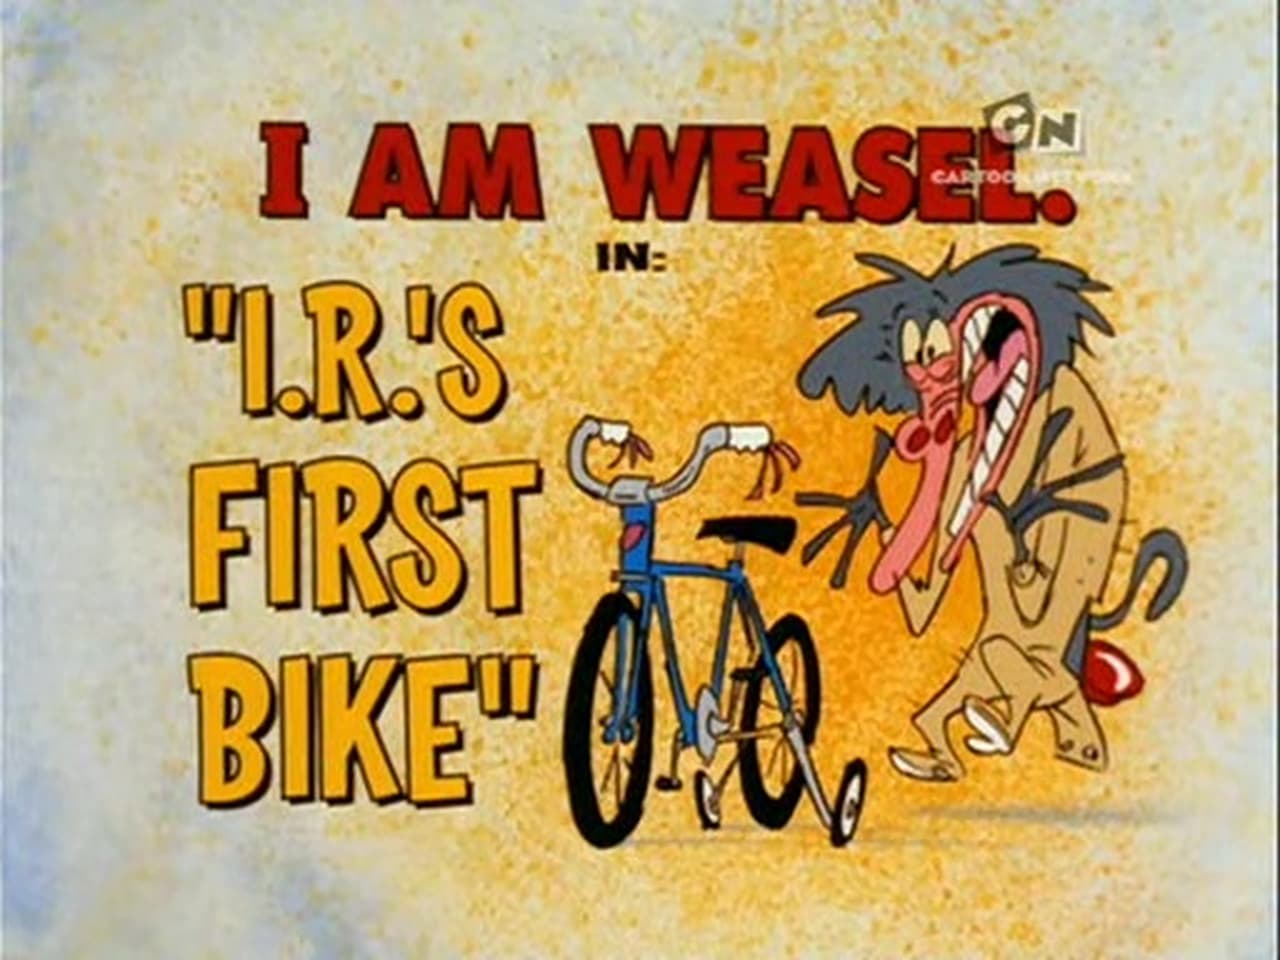 IRs First Bike